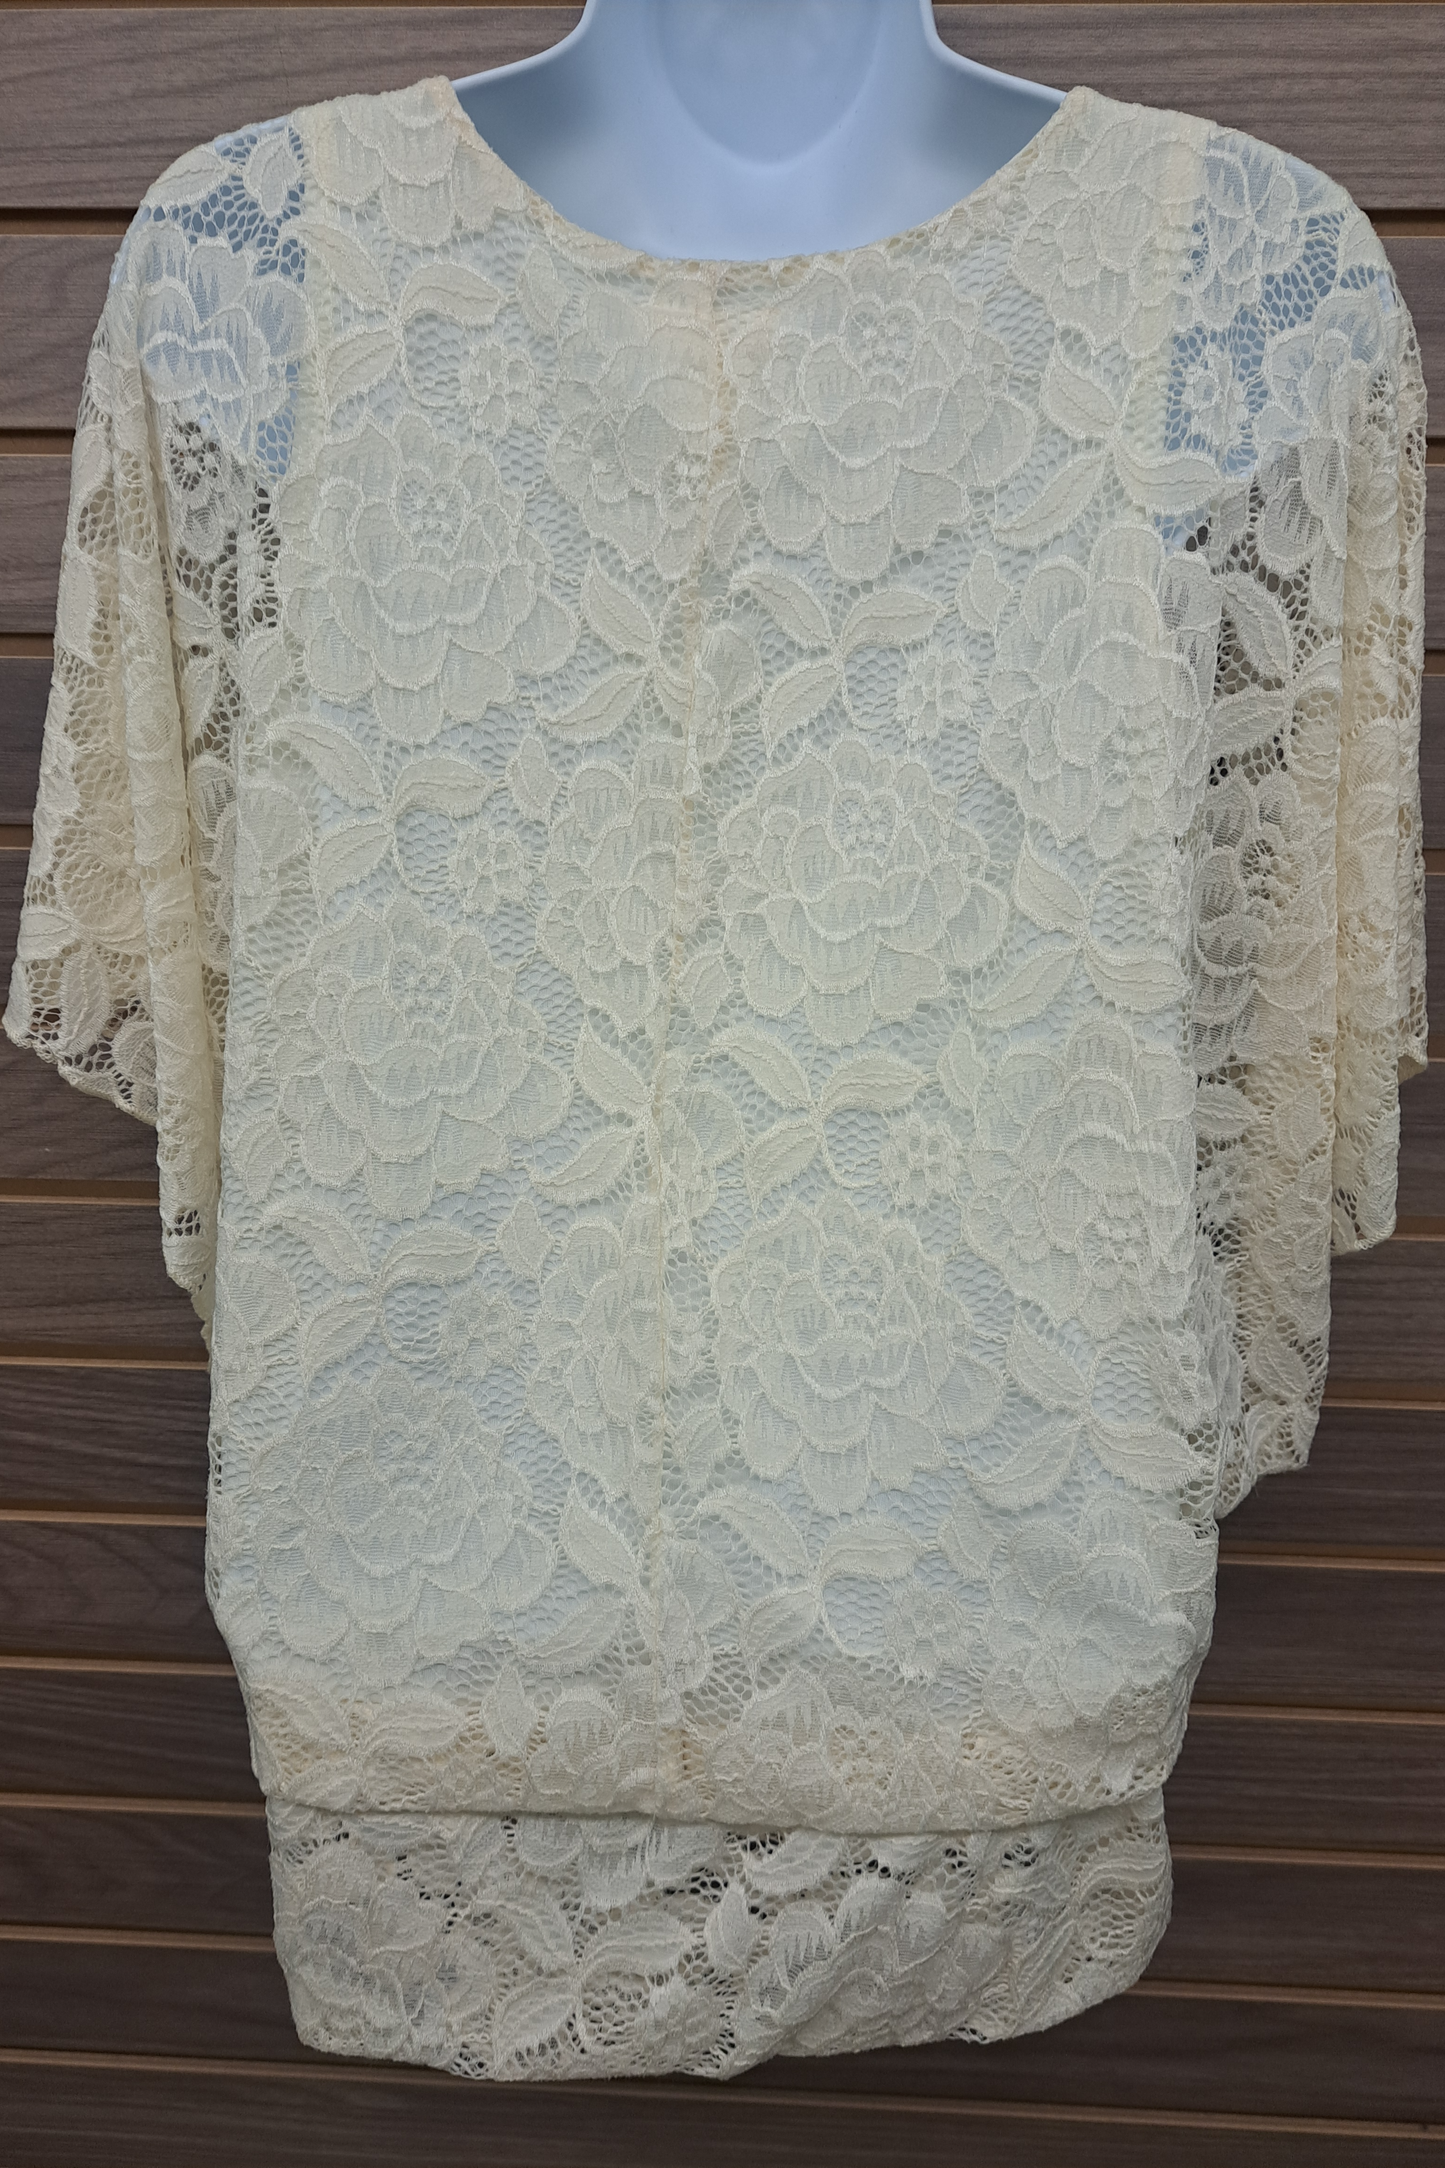 Kimono sleeve lace top w/ undershirt